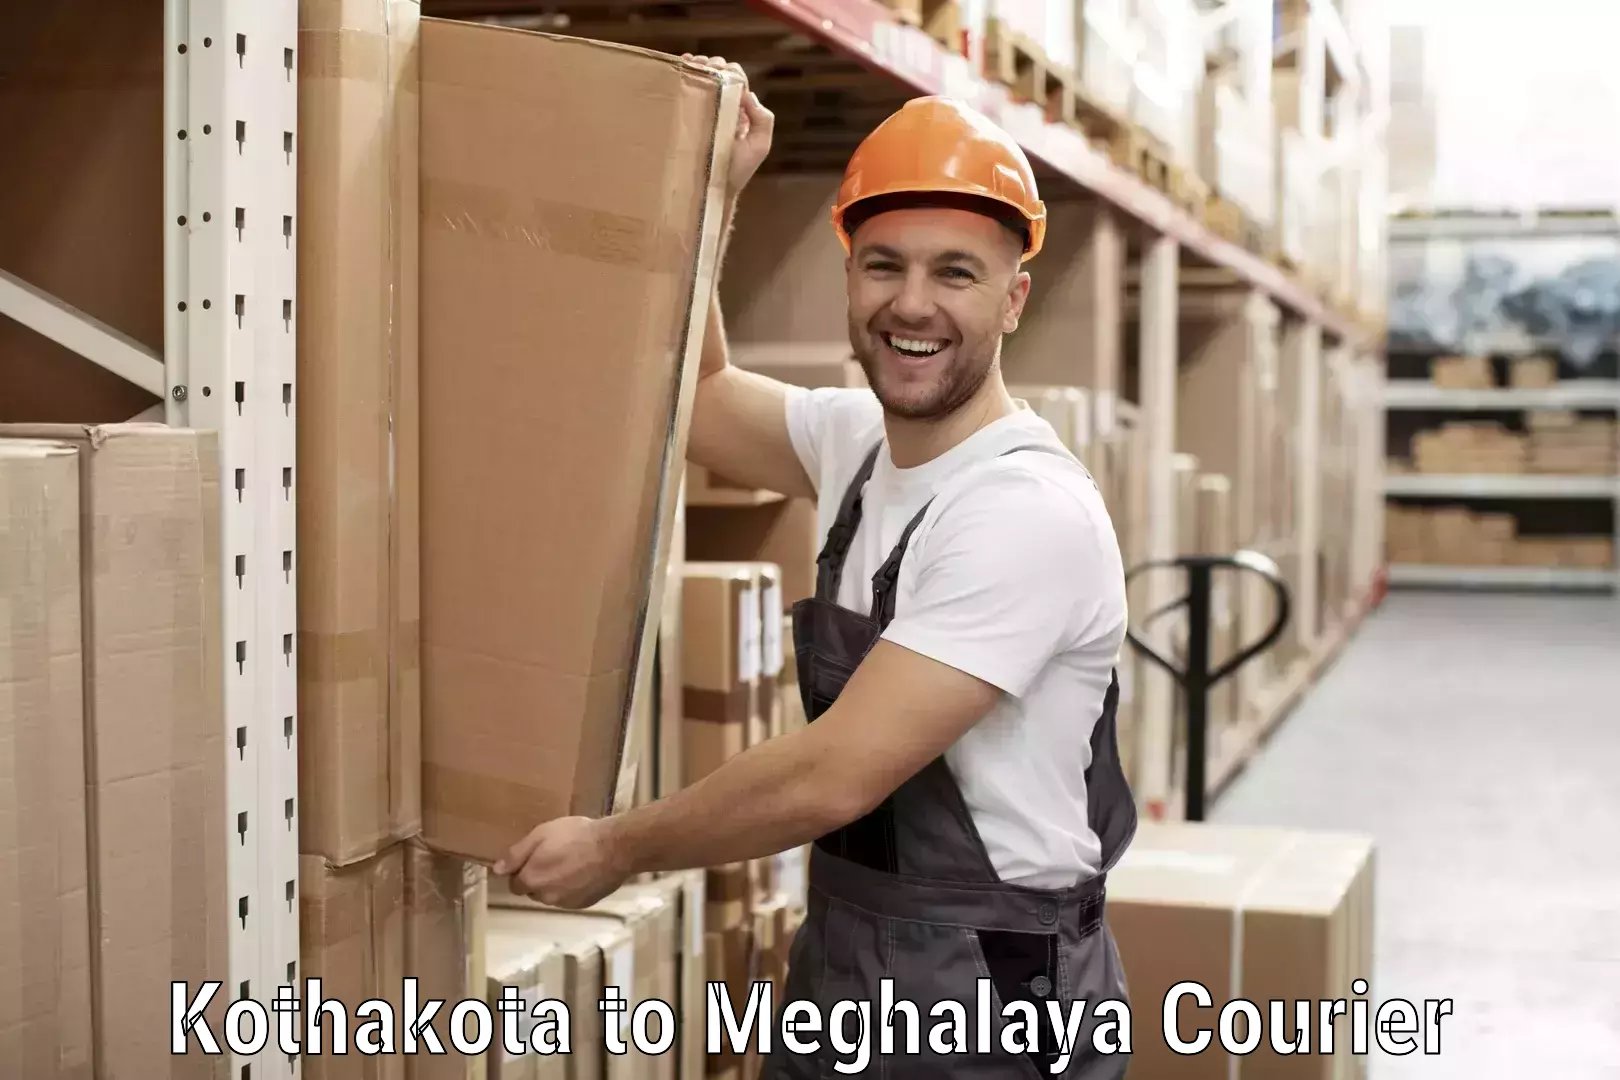 User-friendly delivery service Kothakota to Shillong